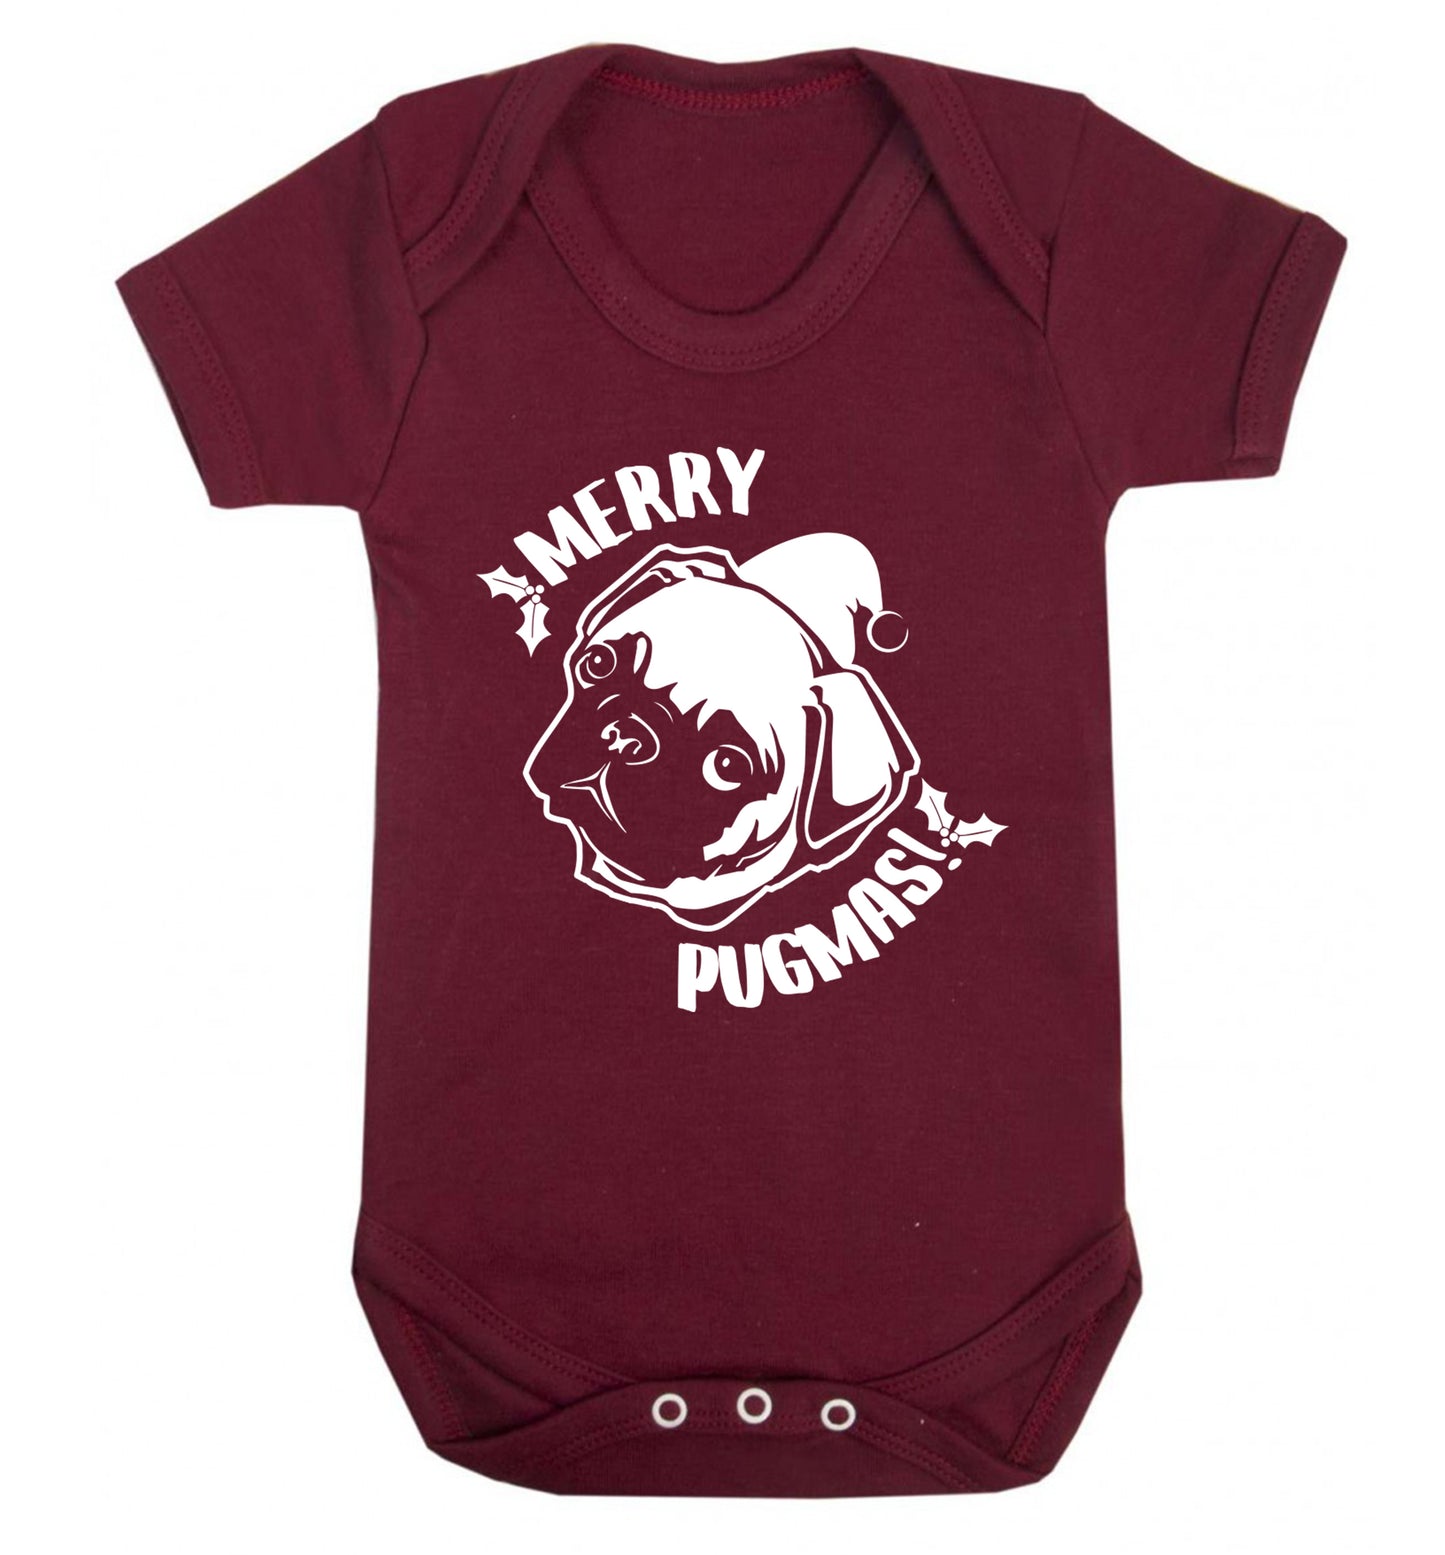 Merry Pugmas Baby Vest maroon 18-24 months